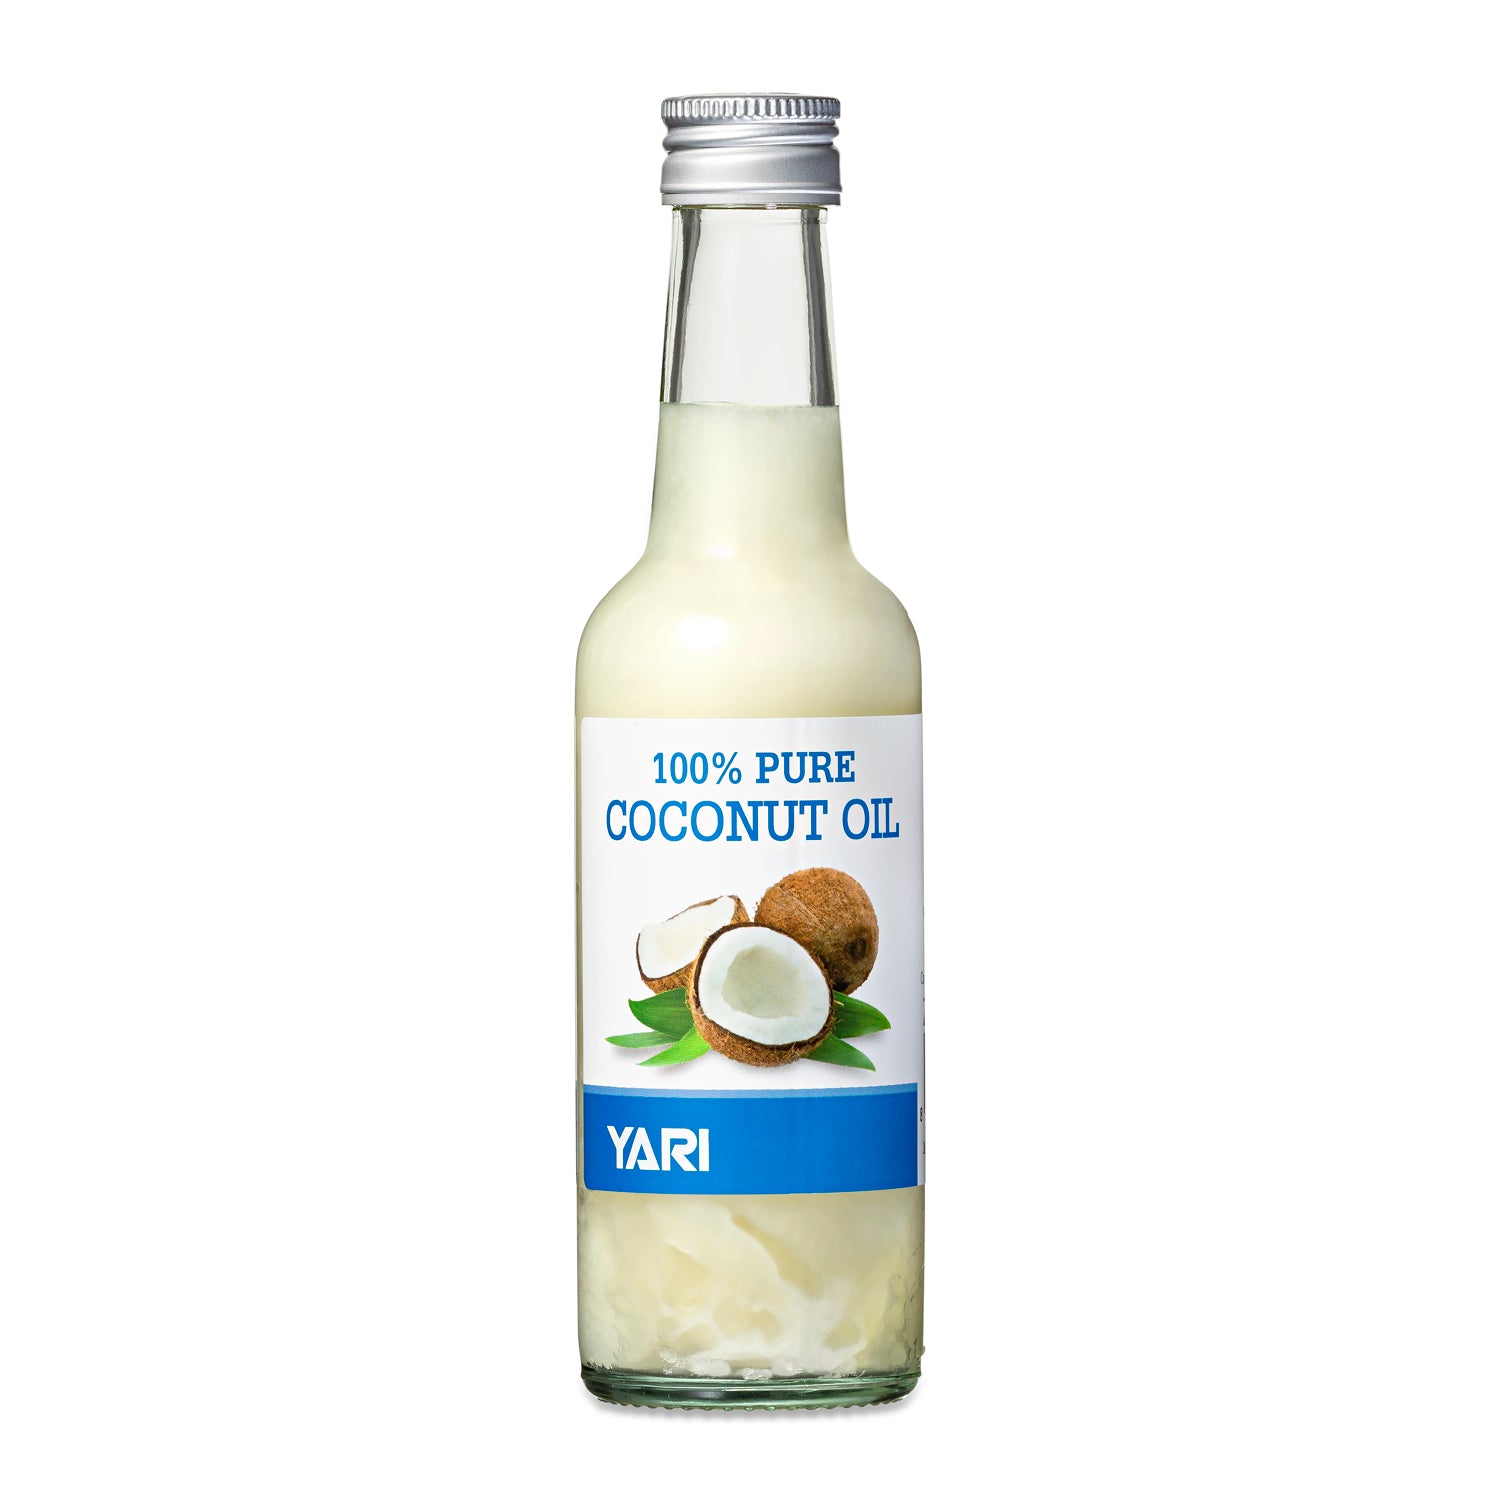 Yari - 100% Pure Coconut Oil 250ml